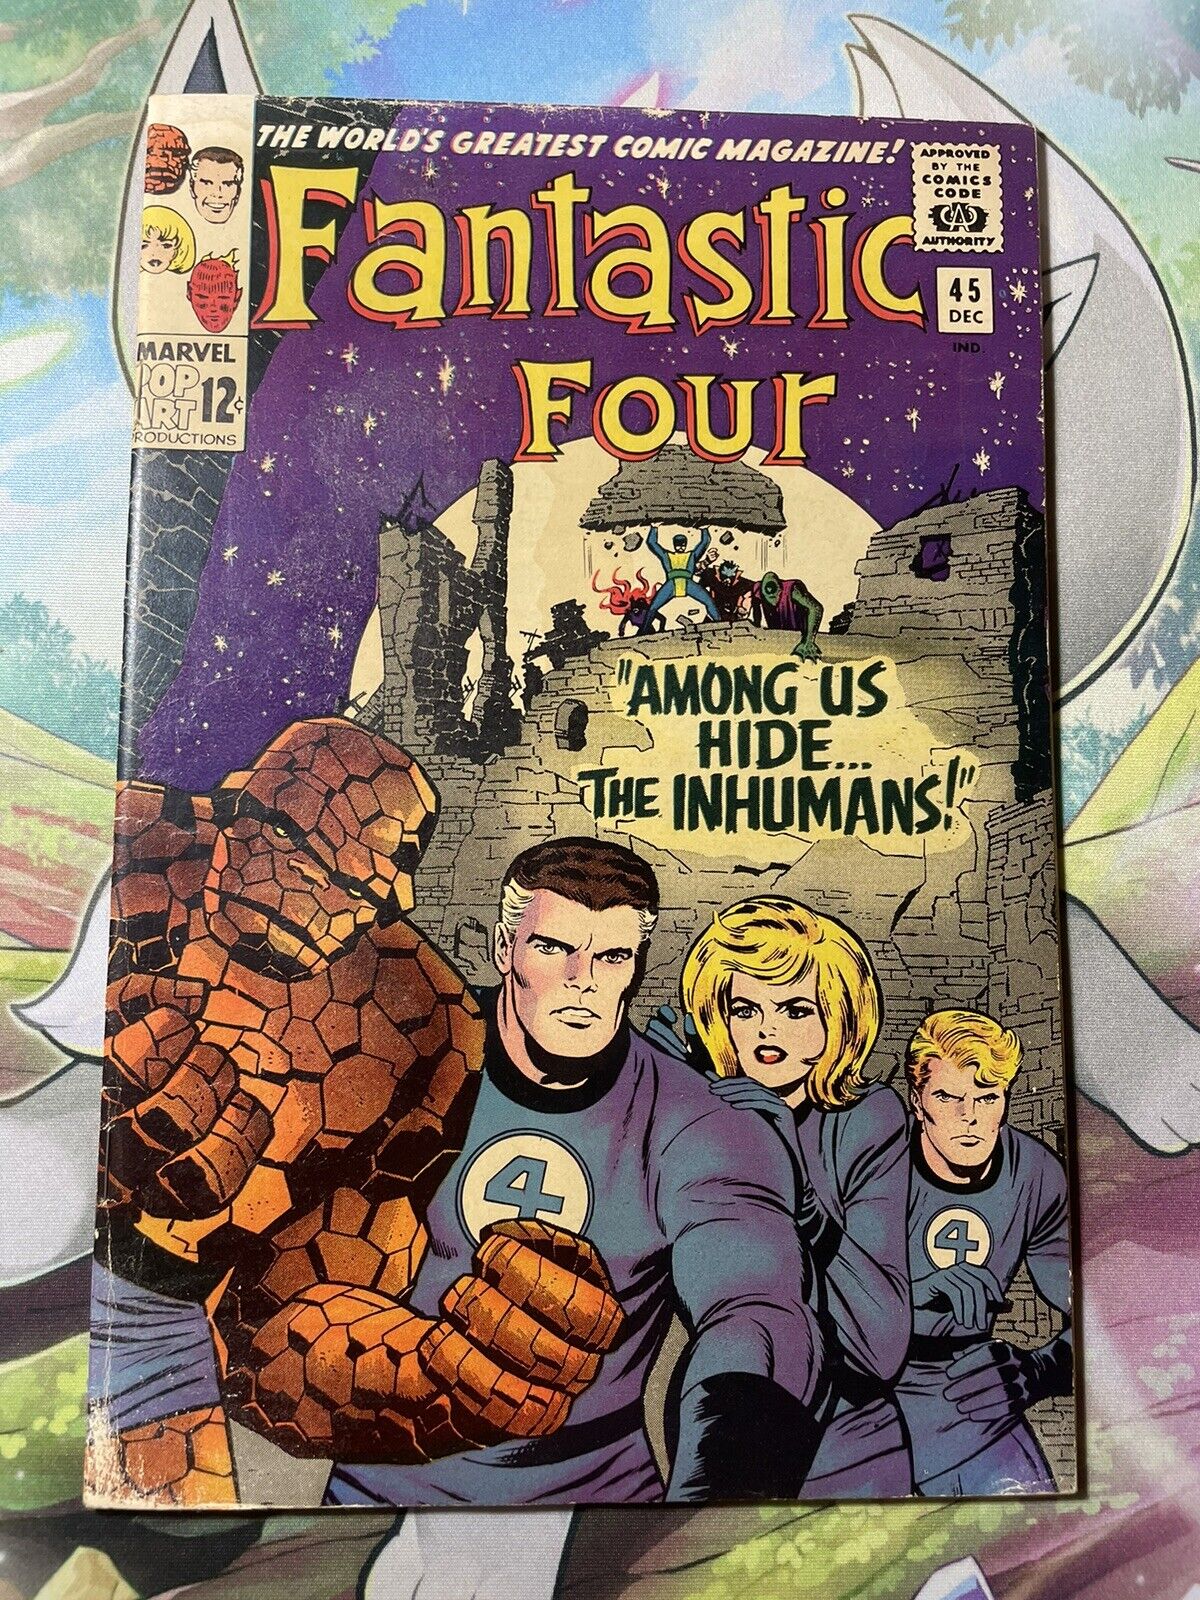 Fantastic Four #45 First App THE INHUMANS & LOCKJAW Marvel Comics 1965 Key Issue